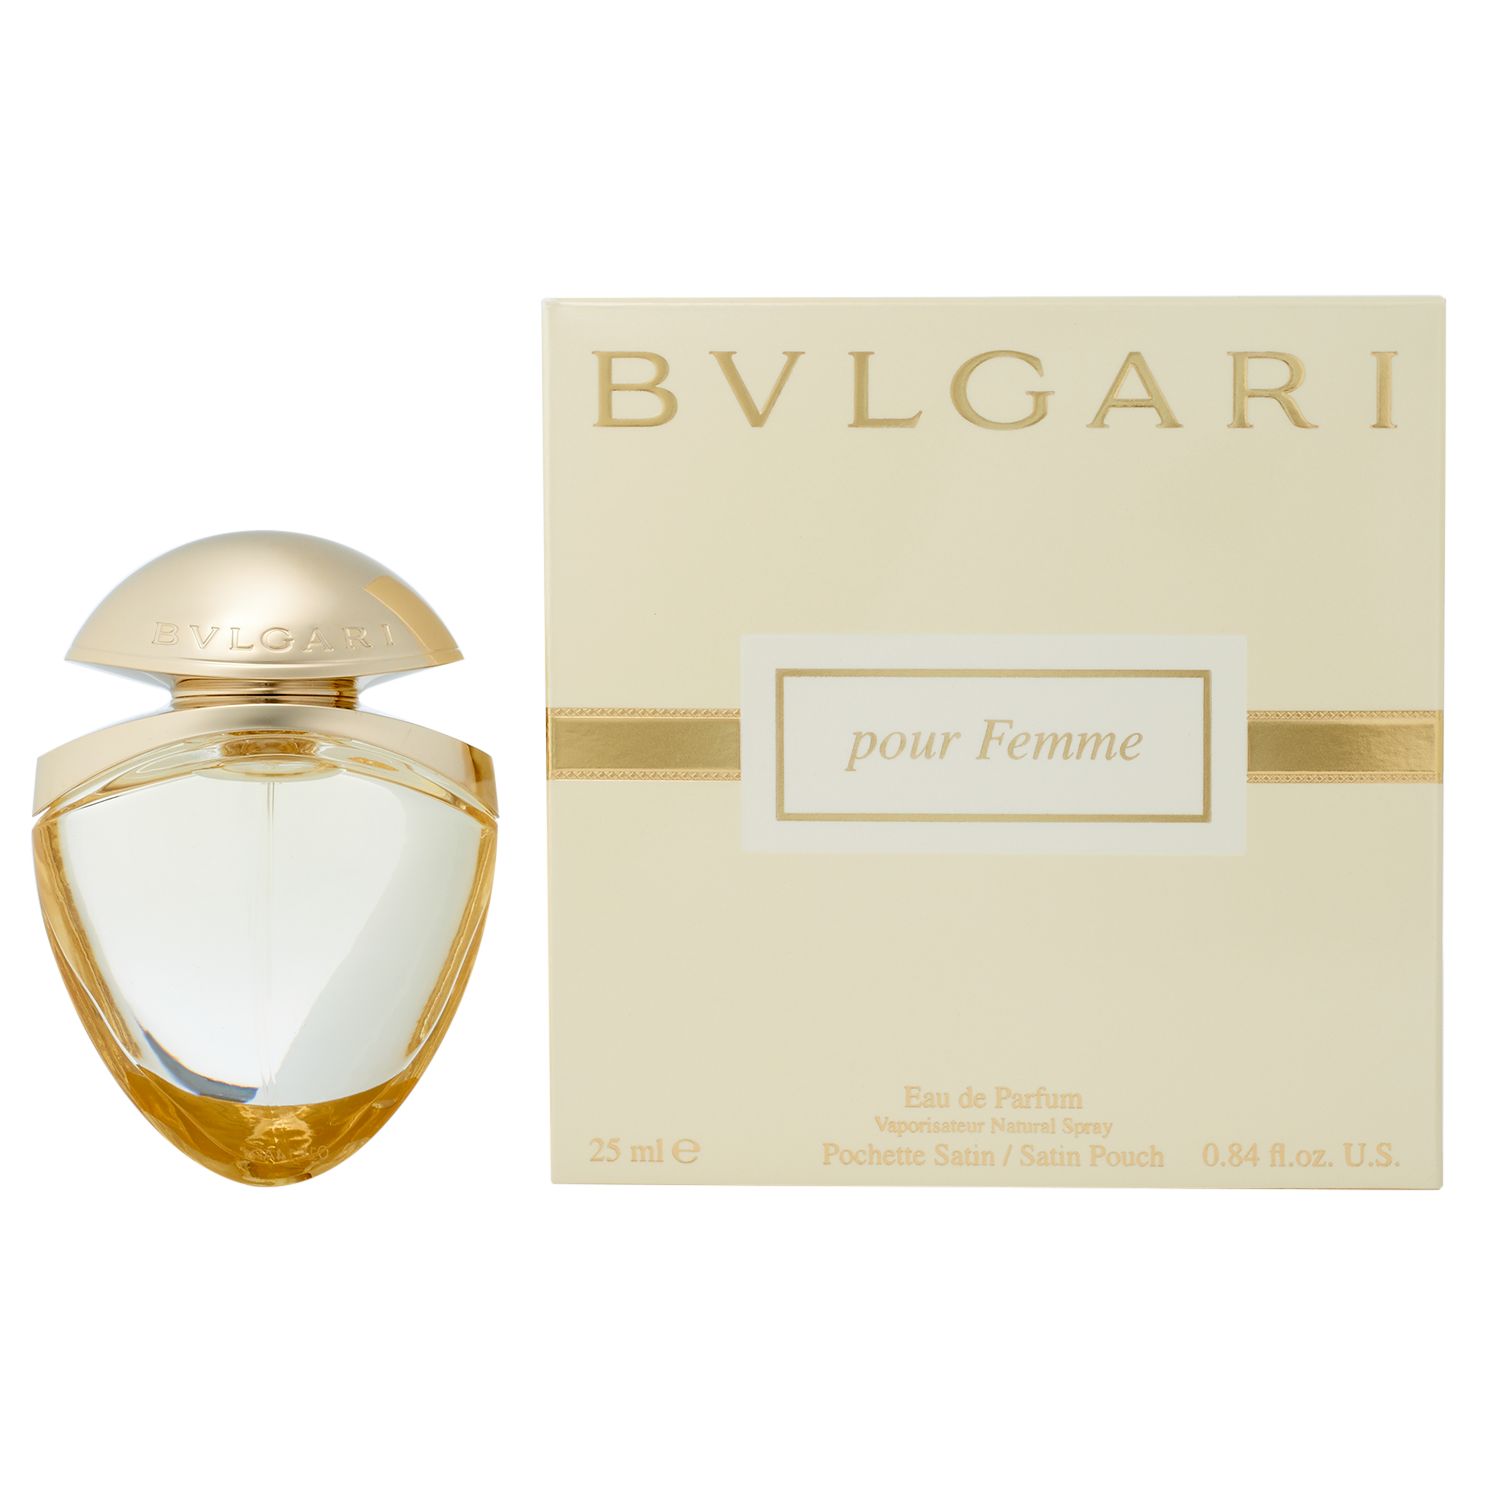 bvlgari jewel charms perfume